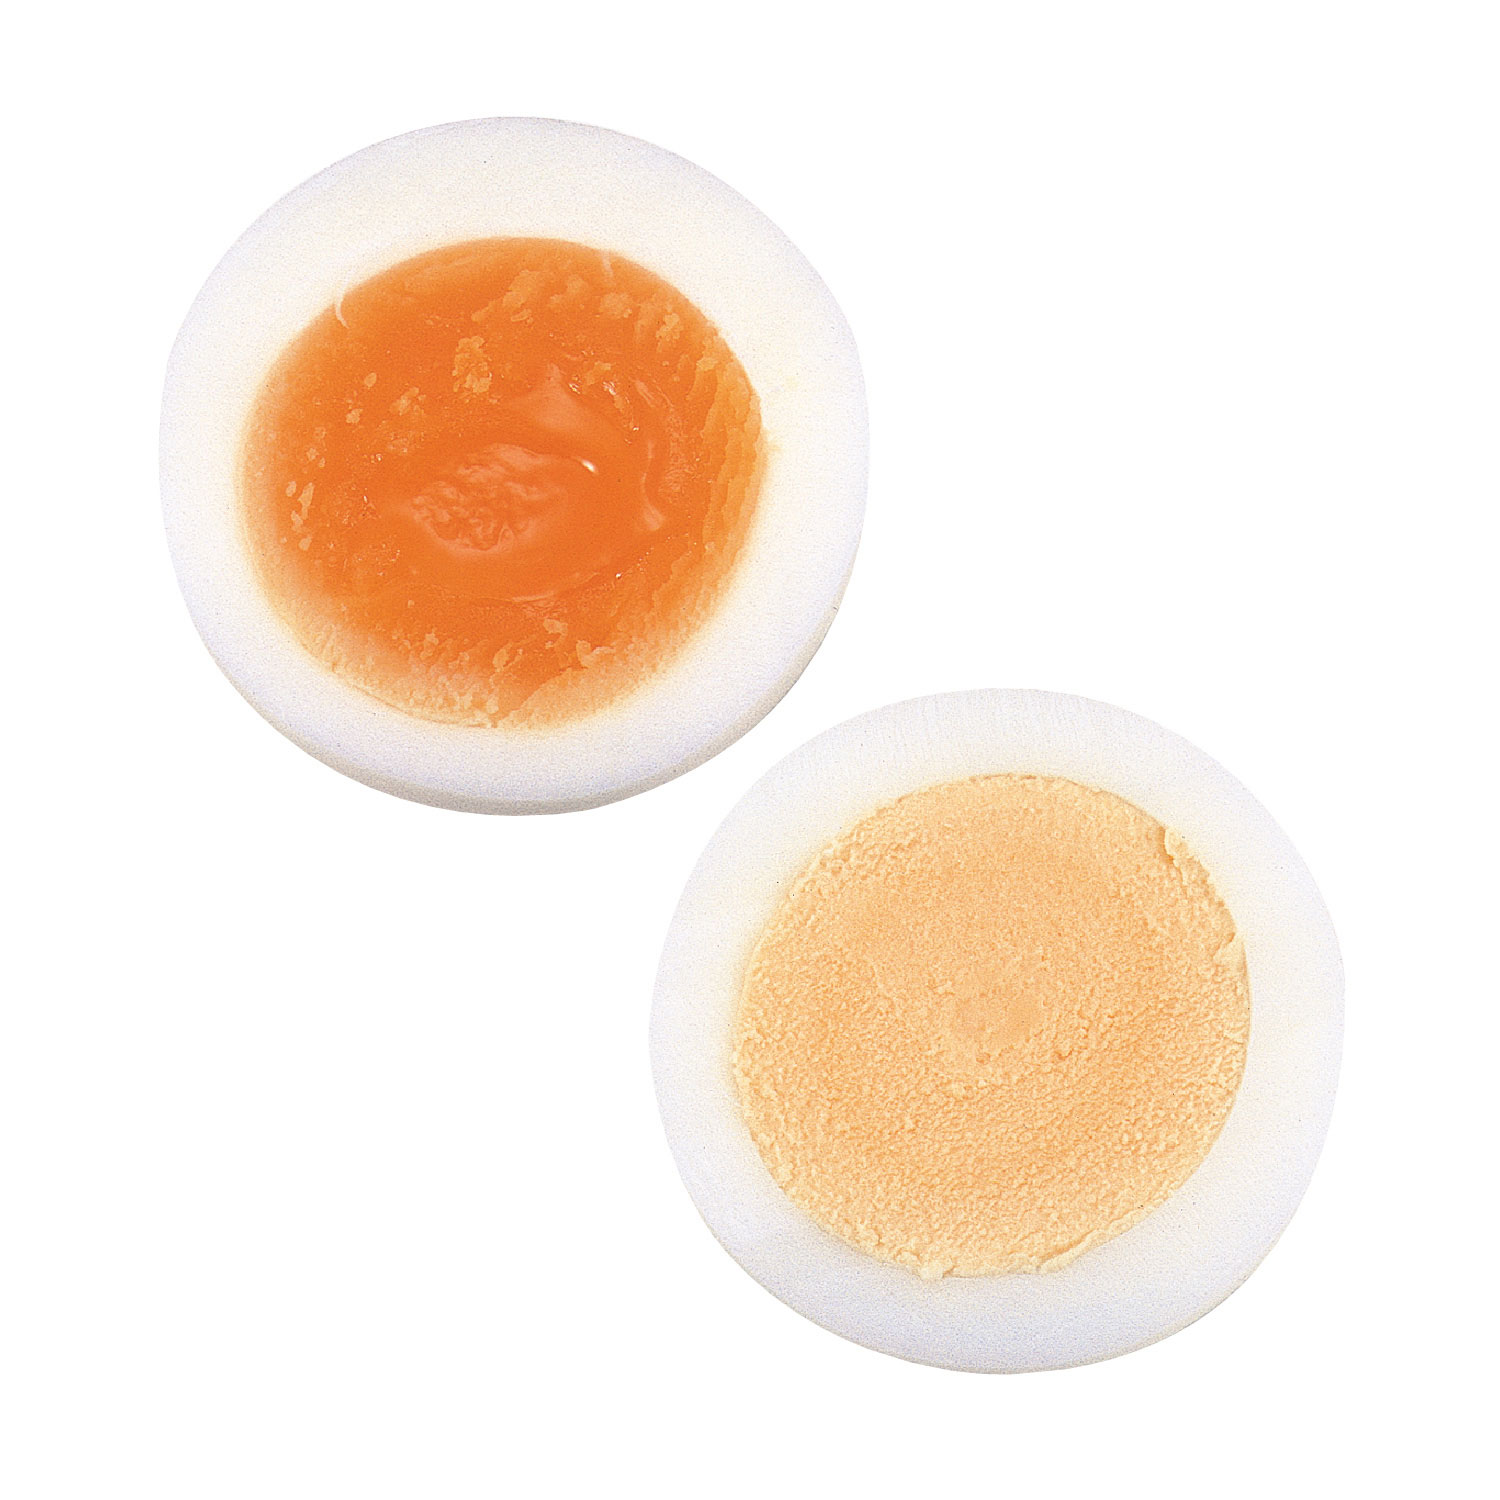 Akebono Microwave Egg Boiler (4 Eggs) - Globalkitchen Japan